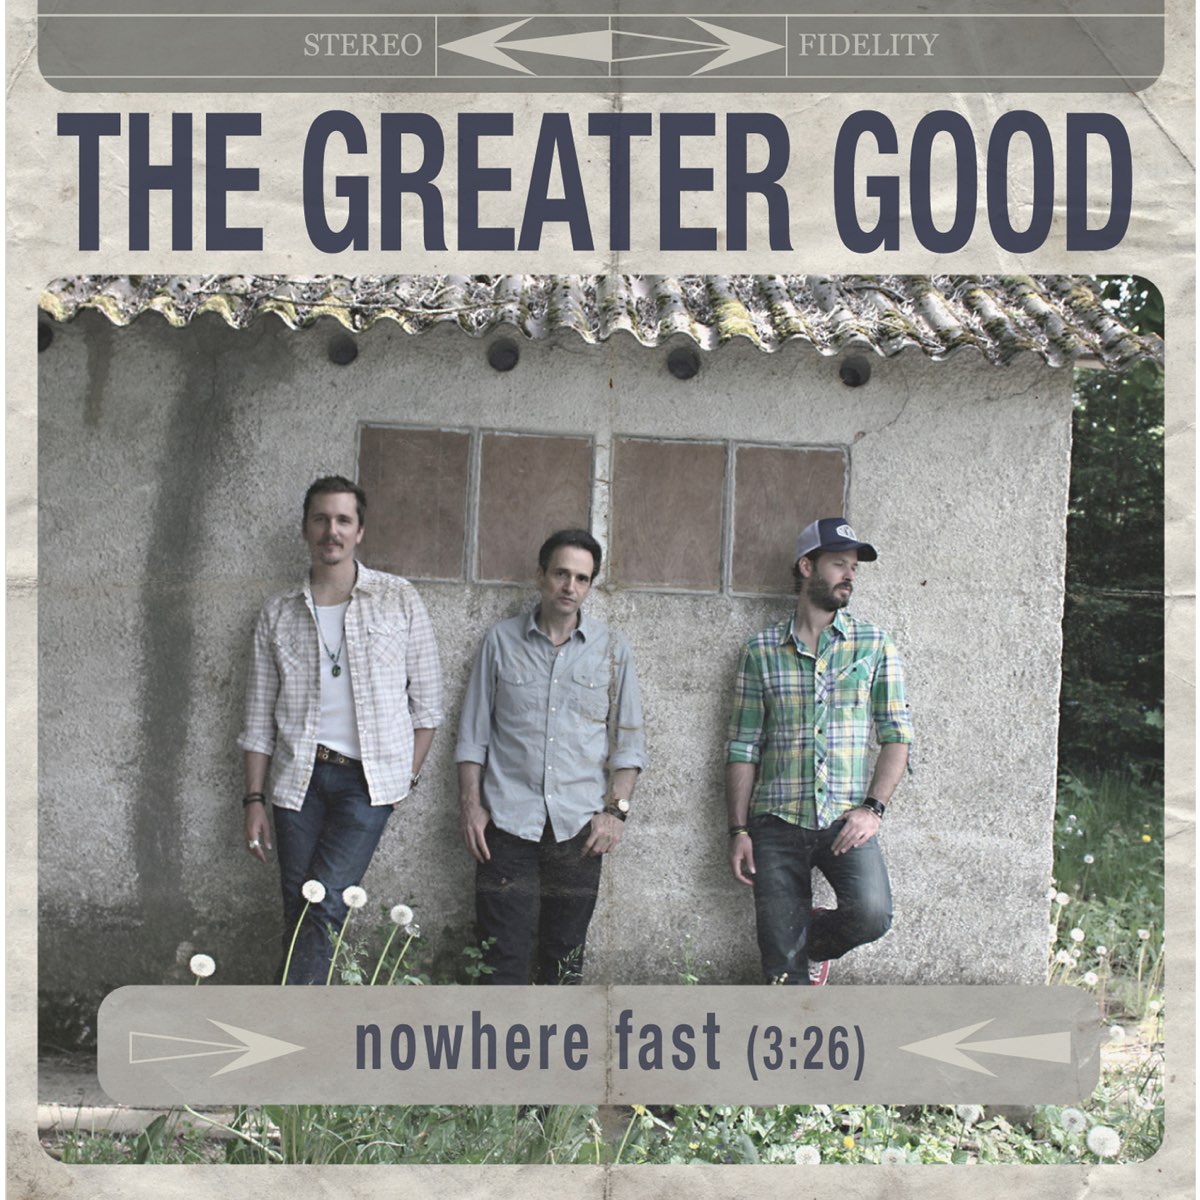 Песня Nowhere fast. Greatest good. Good people «the Greater good album. NOWHEREFAST - NOWHEREFAST - 1982 фото.